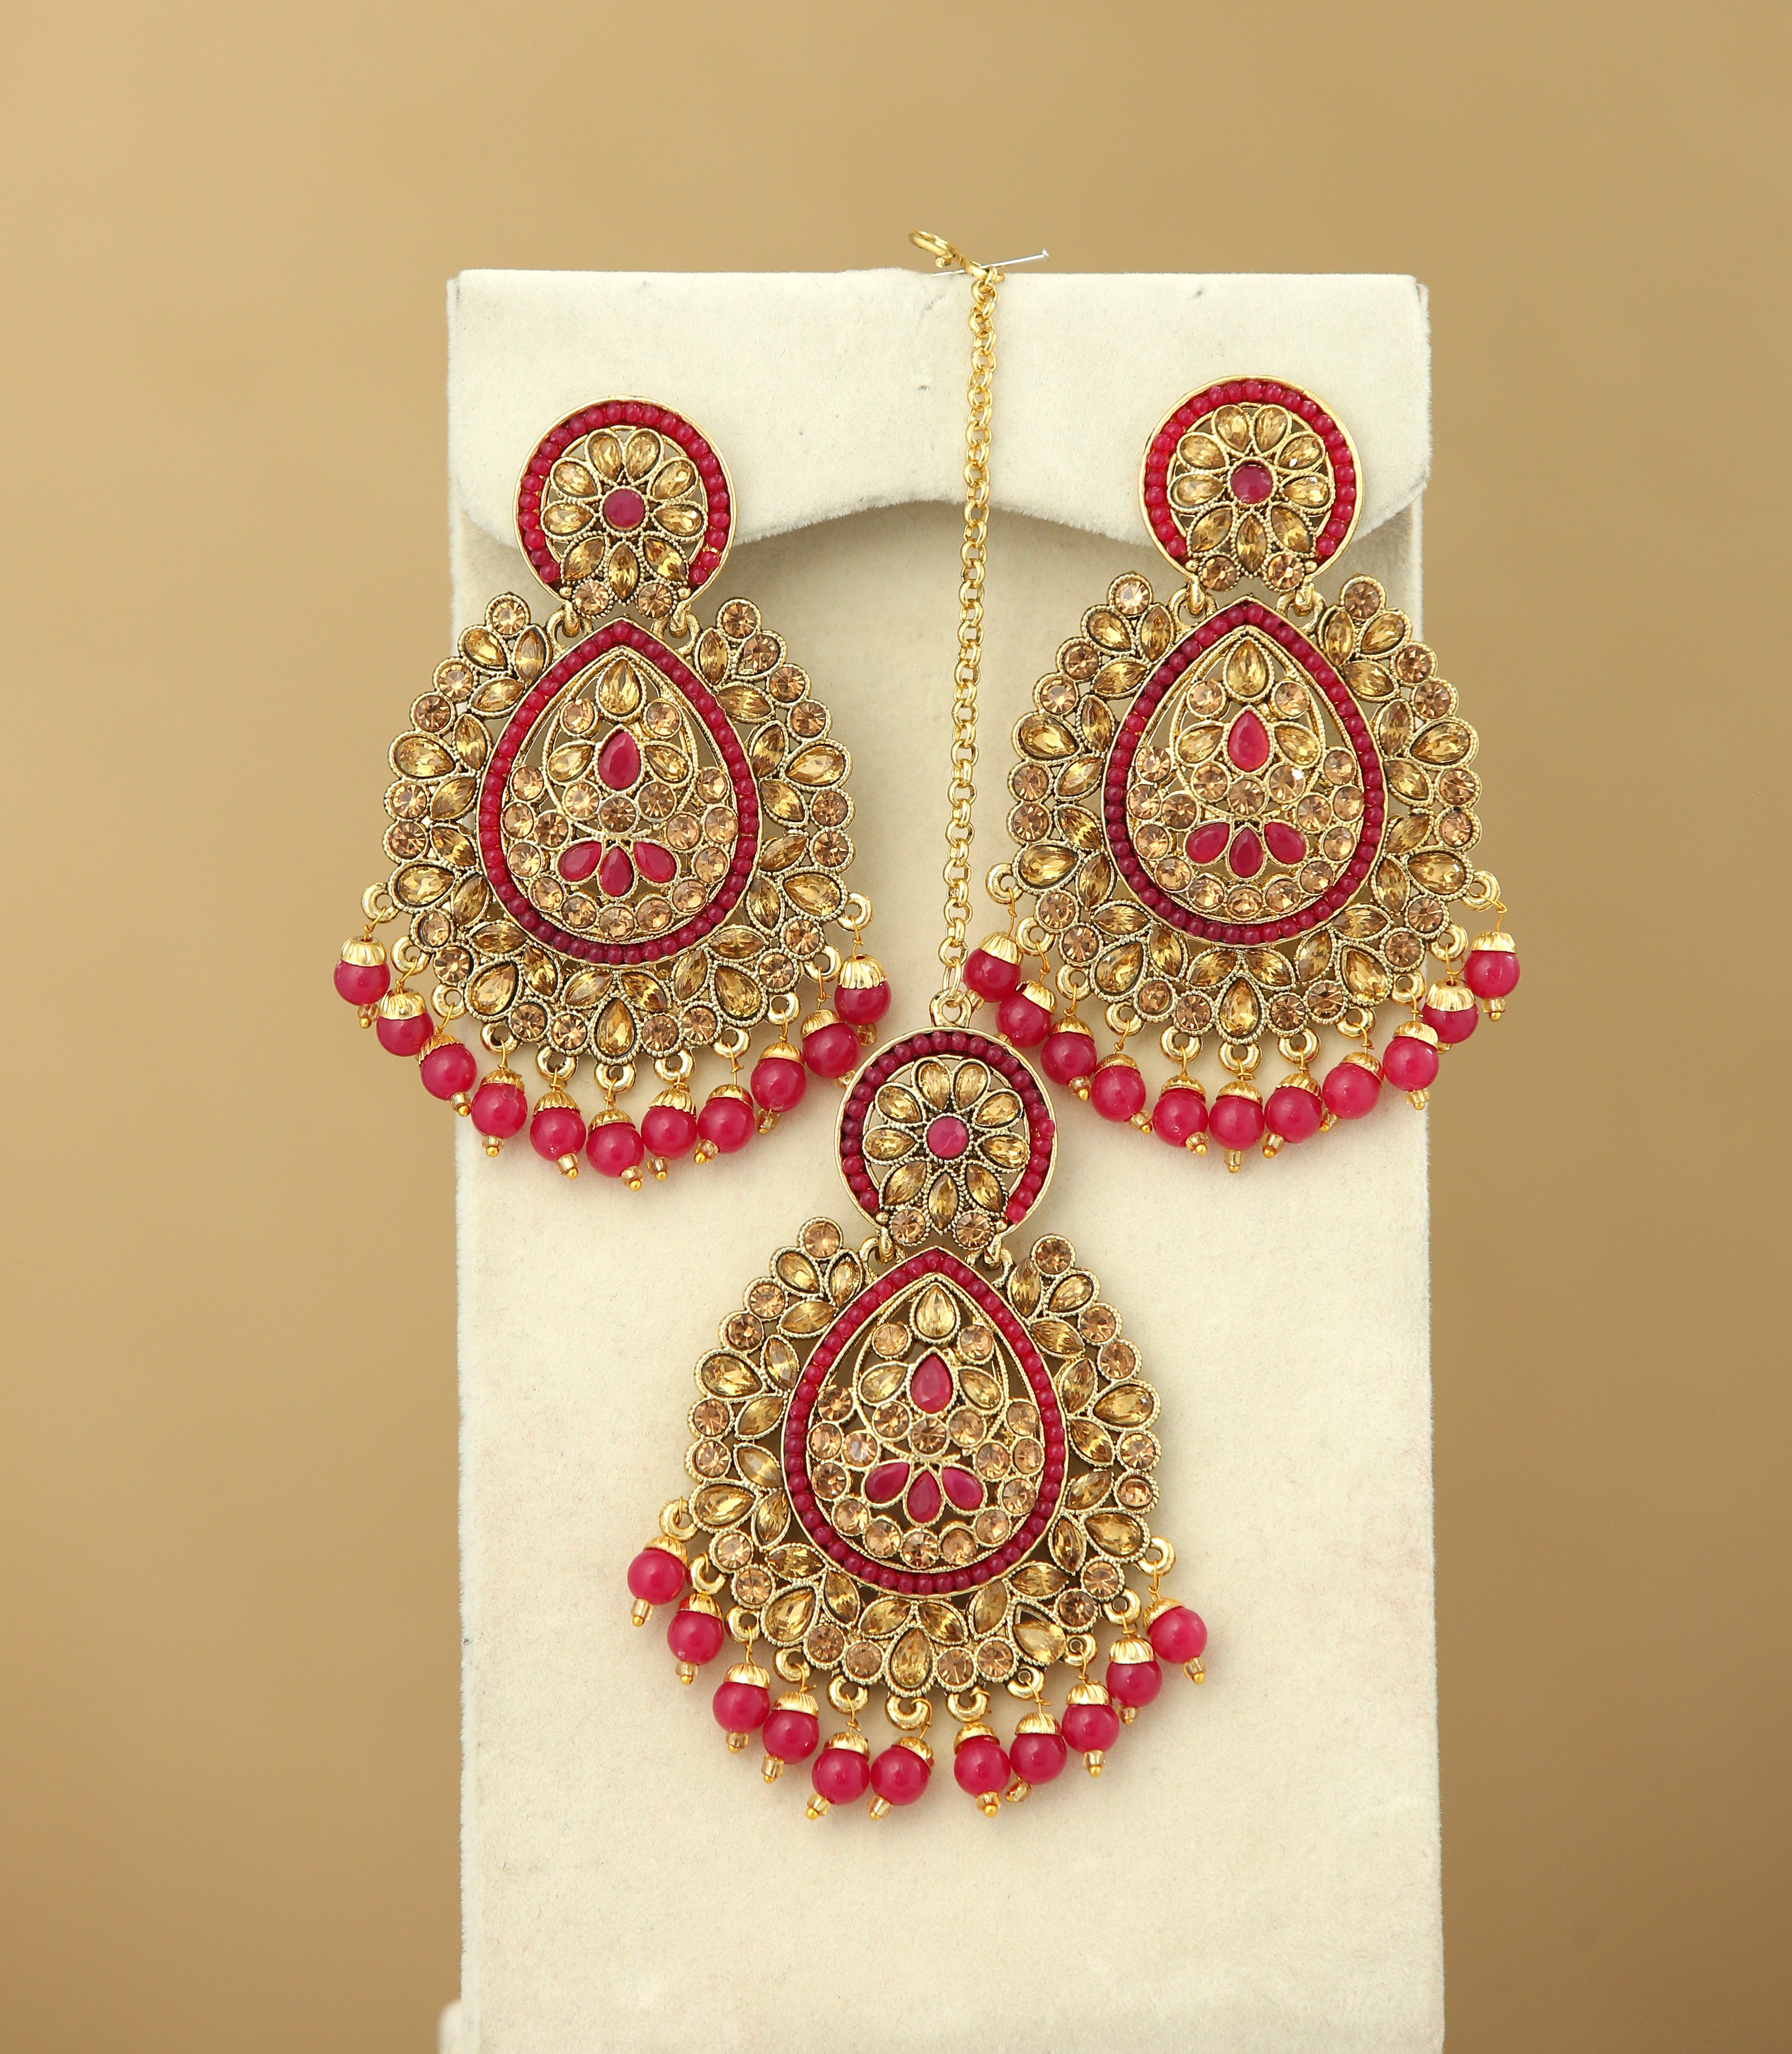 Nargis Earrings with Tikka